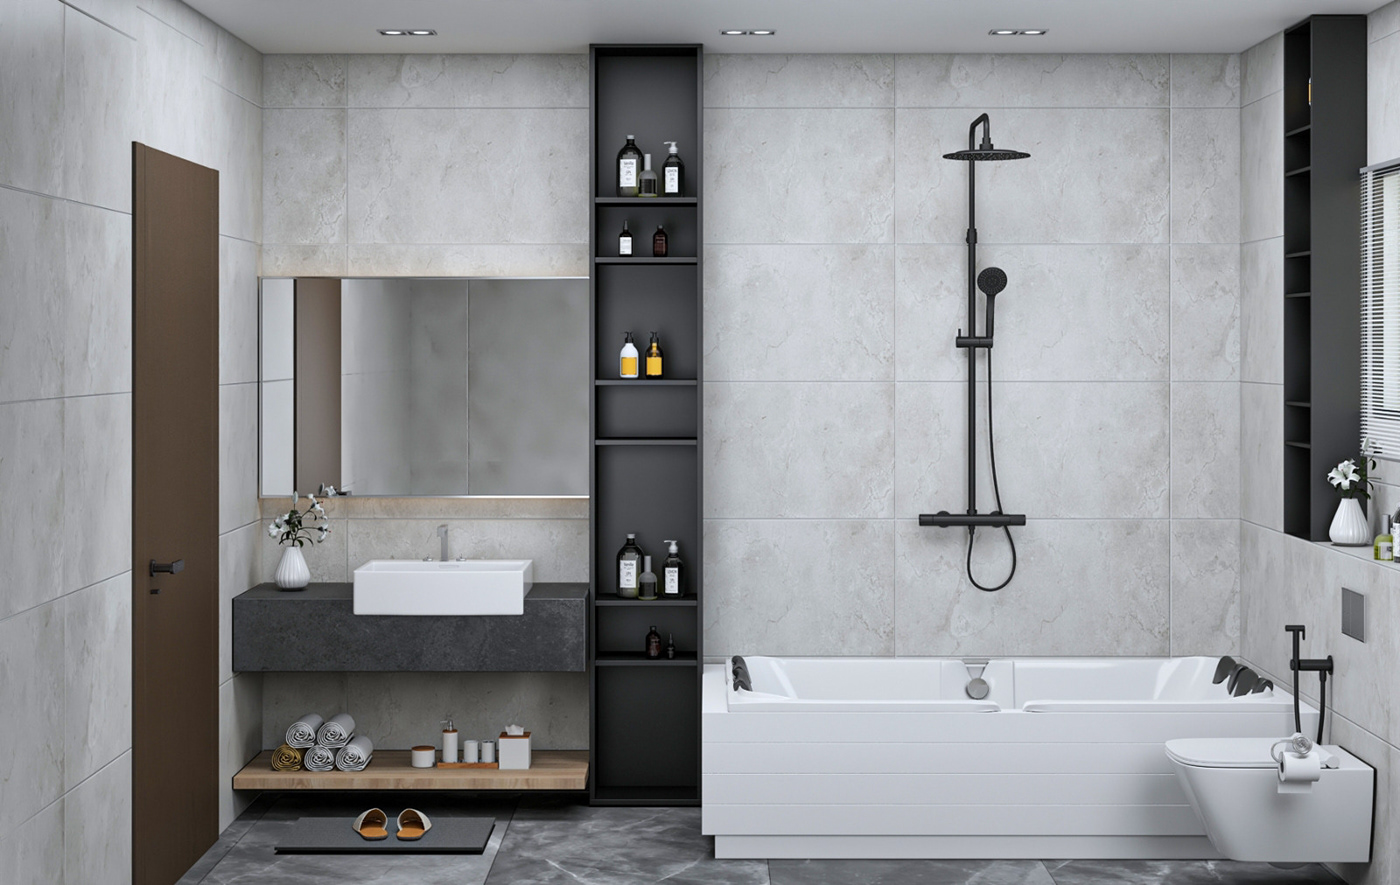 #bathroom #interior #interiorshots #renderings #modern   #minimalism #materials  #architecture #decor